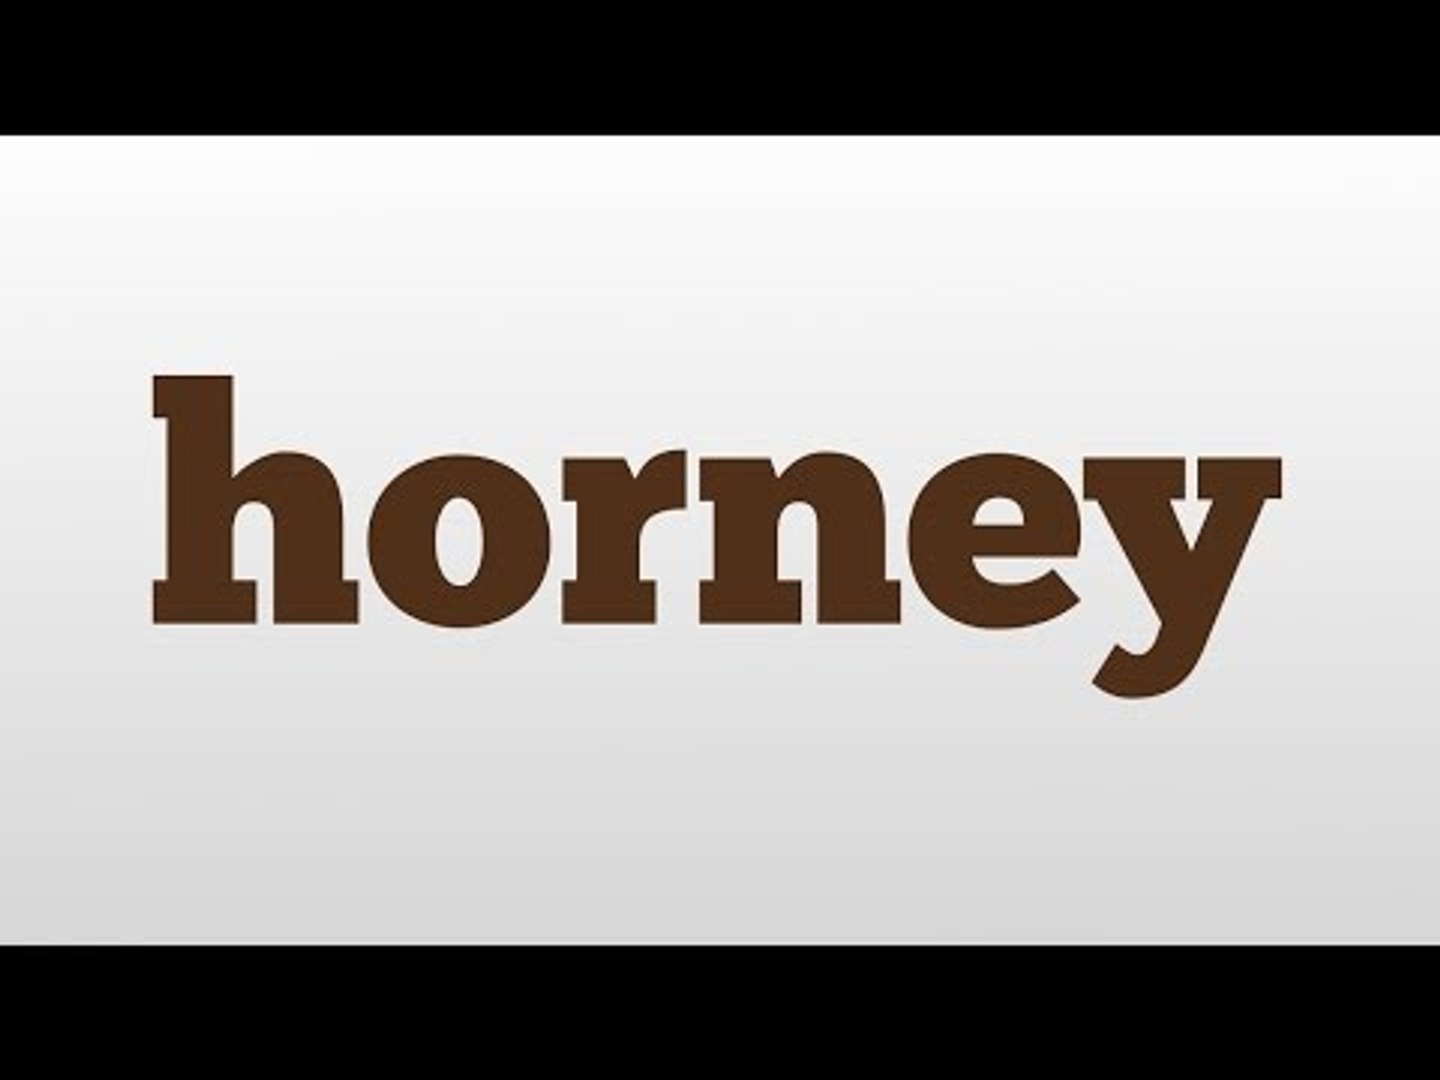 Horney Or Horny